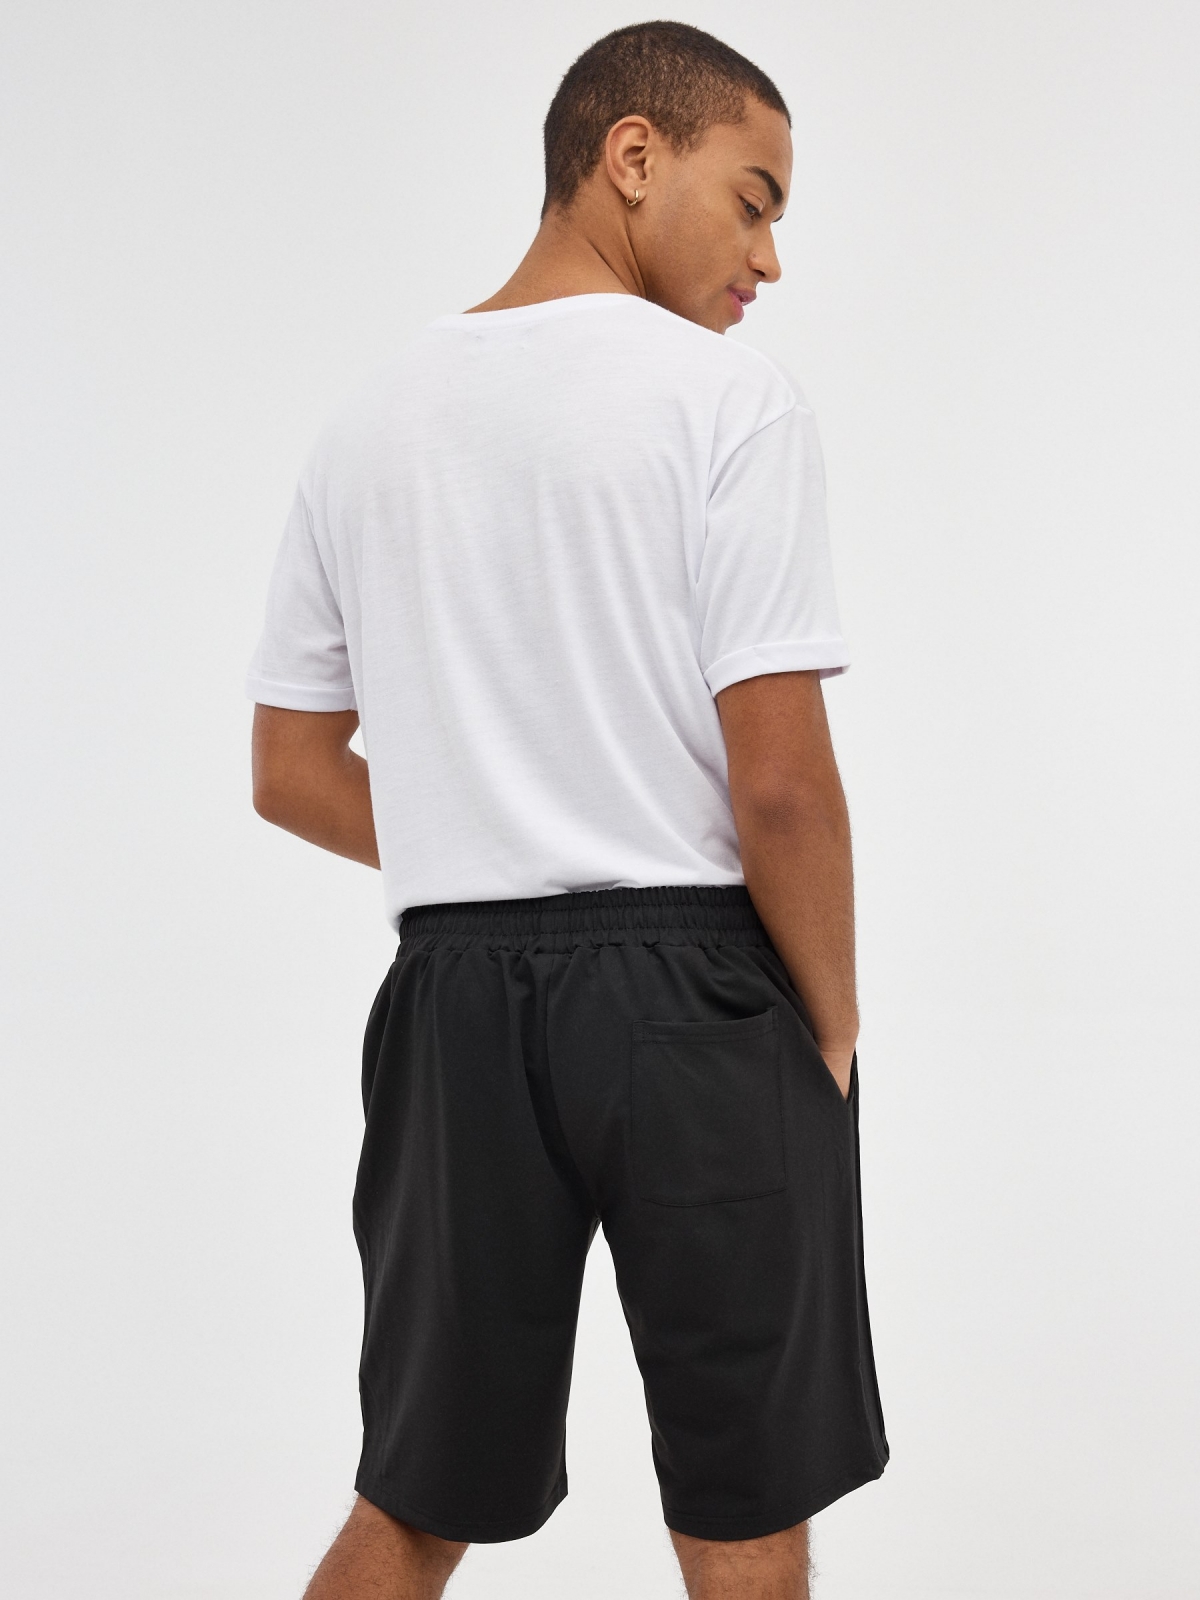 Black Bermuda jogger shorts black middle back view